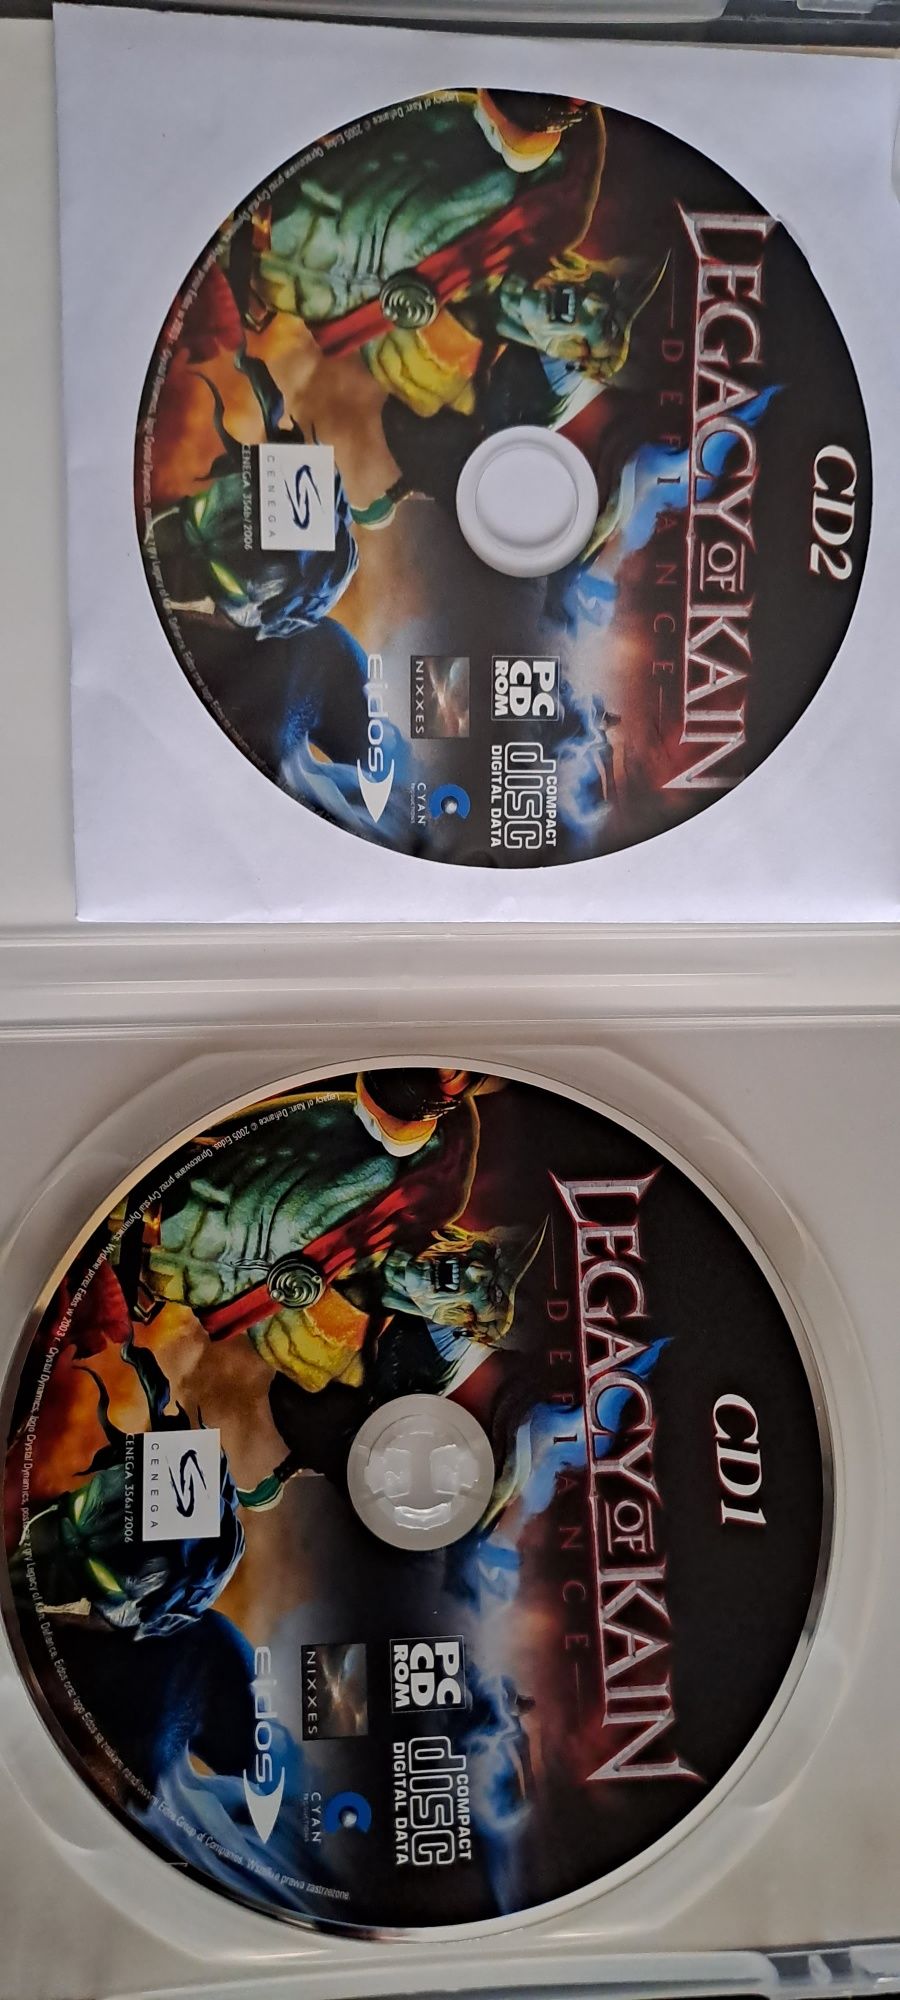 Gra PC "Legacy of Kain / defiance"